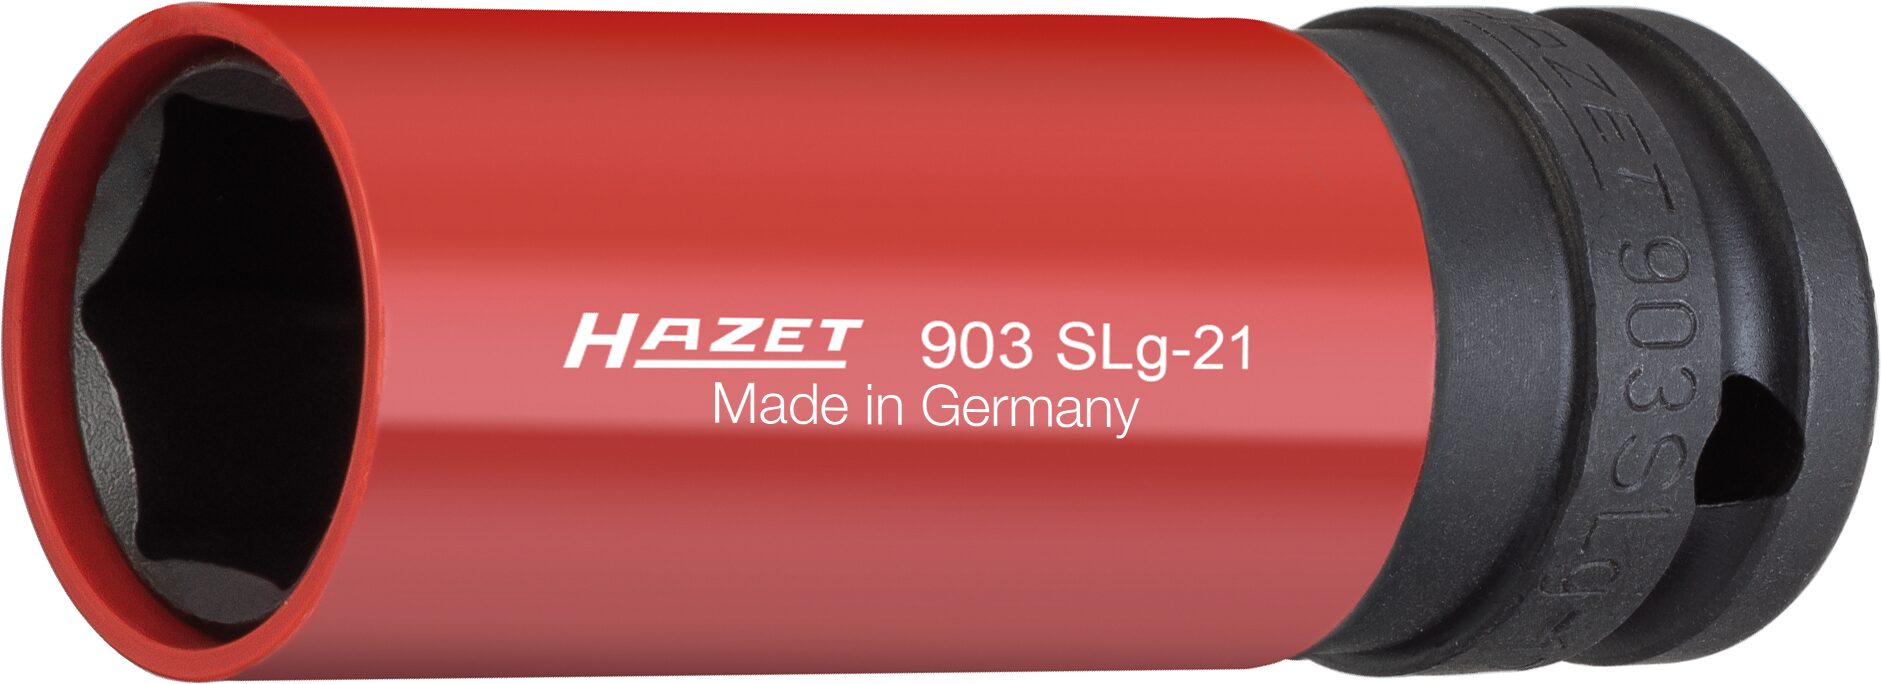 HAZET Schlag-, Maschinenschrauber Steckschlüsseleinsatz · Sechskant 903SLG-21 · Vierkant hohl 12,5 mm (1/2 Zoll) · Außen Sechskant-Tractionsprofil · 21 mm